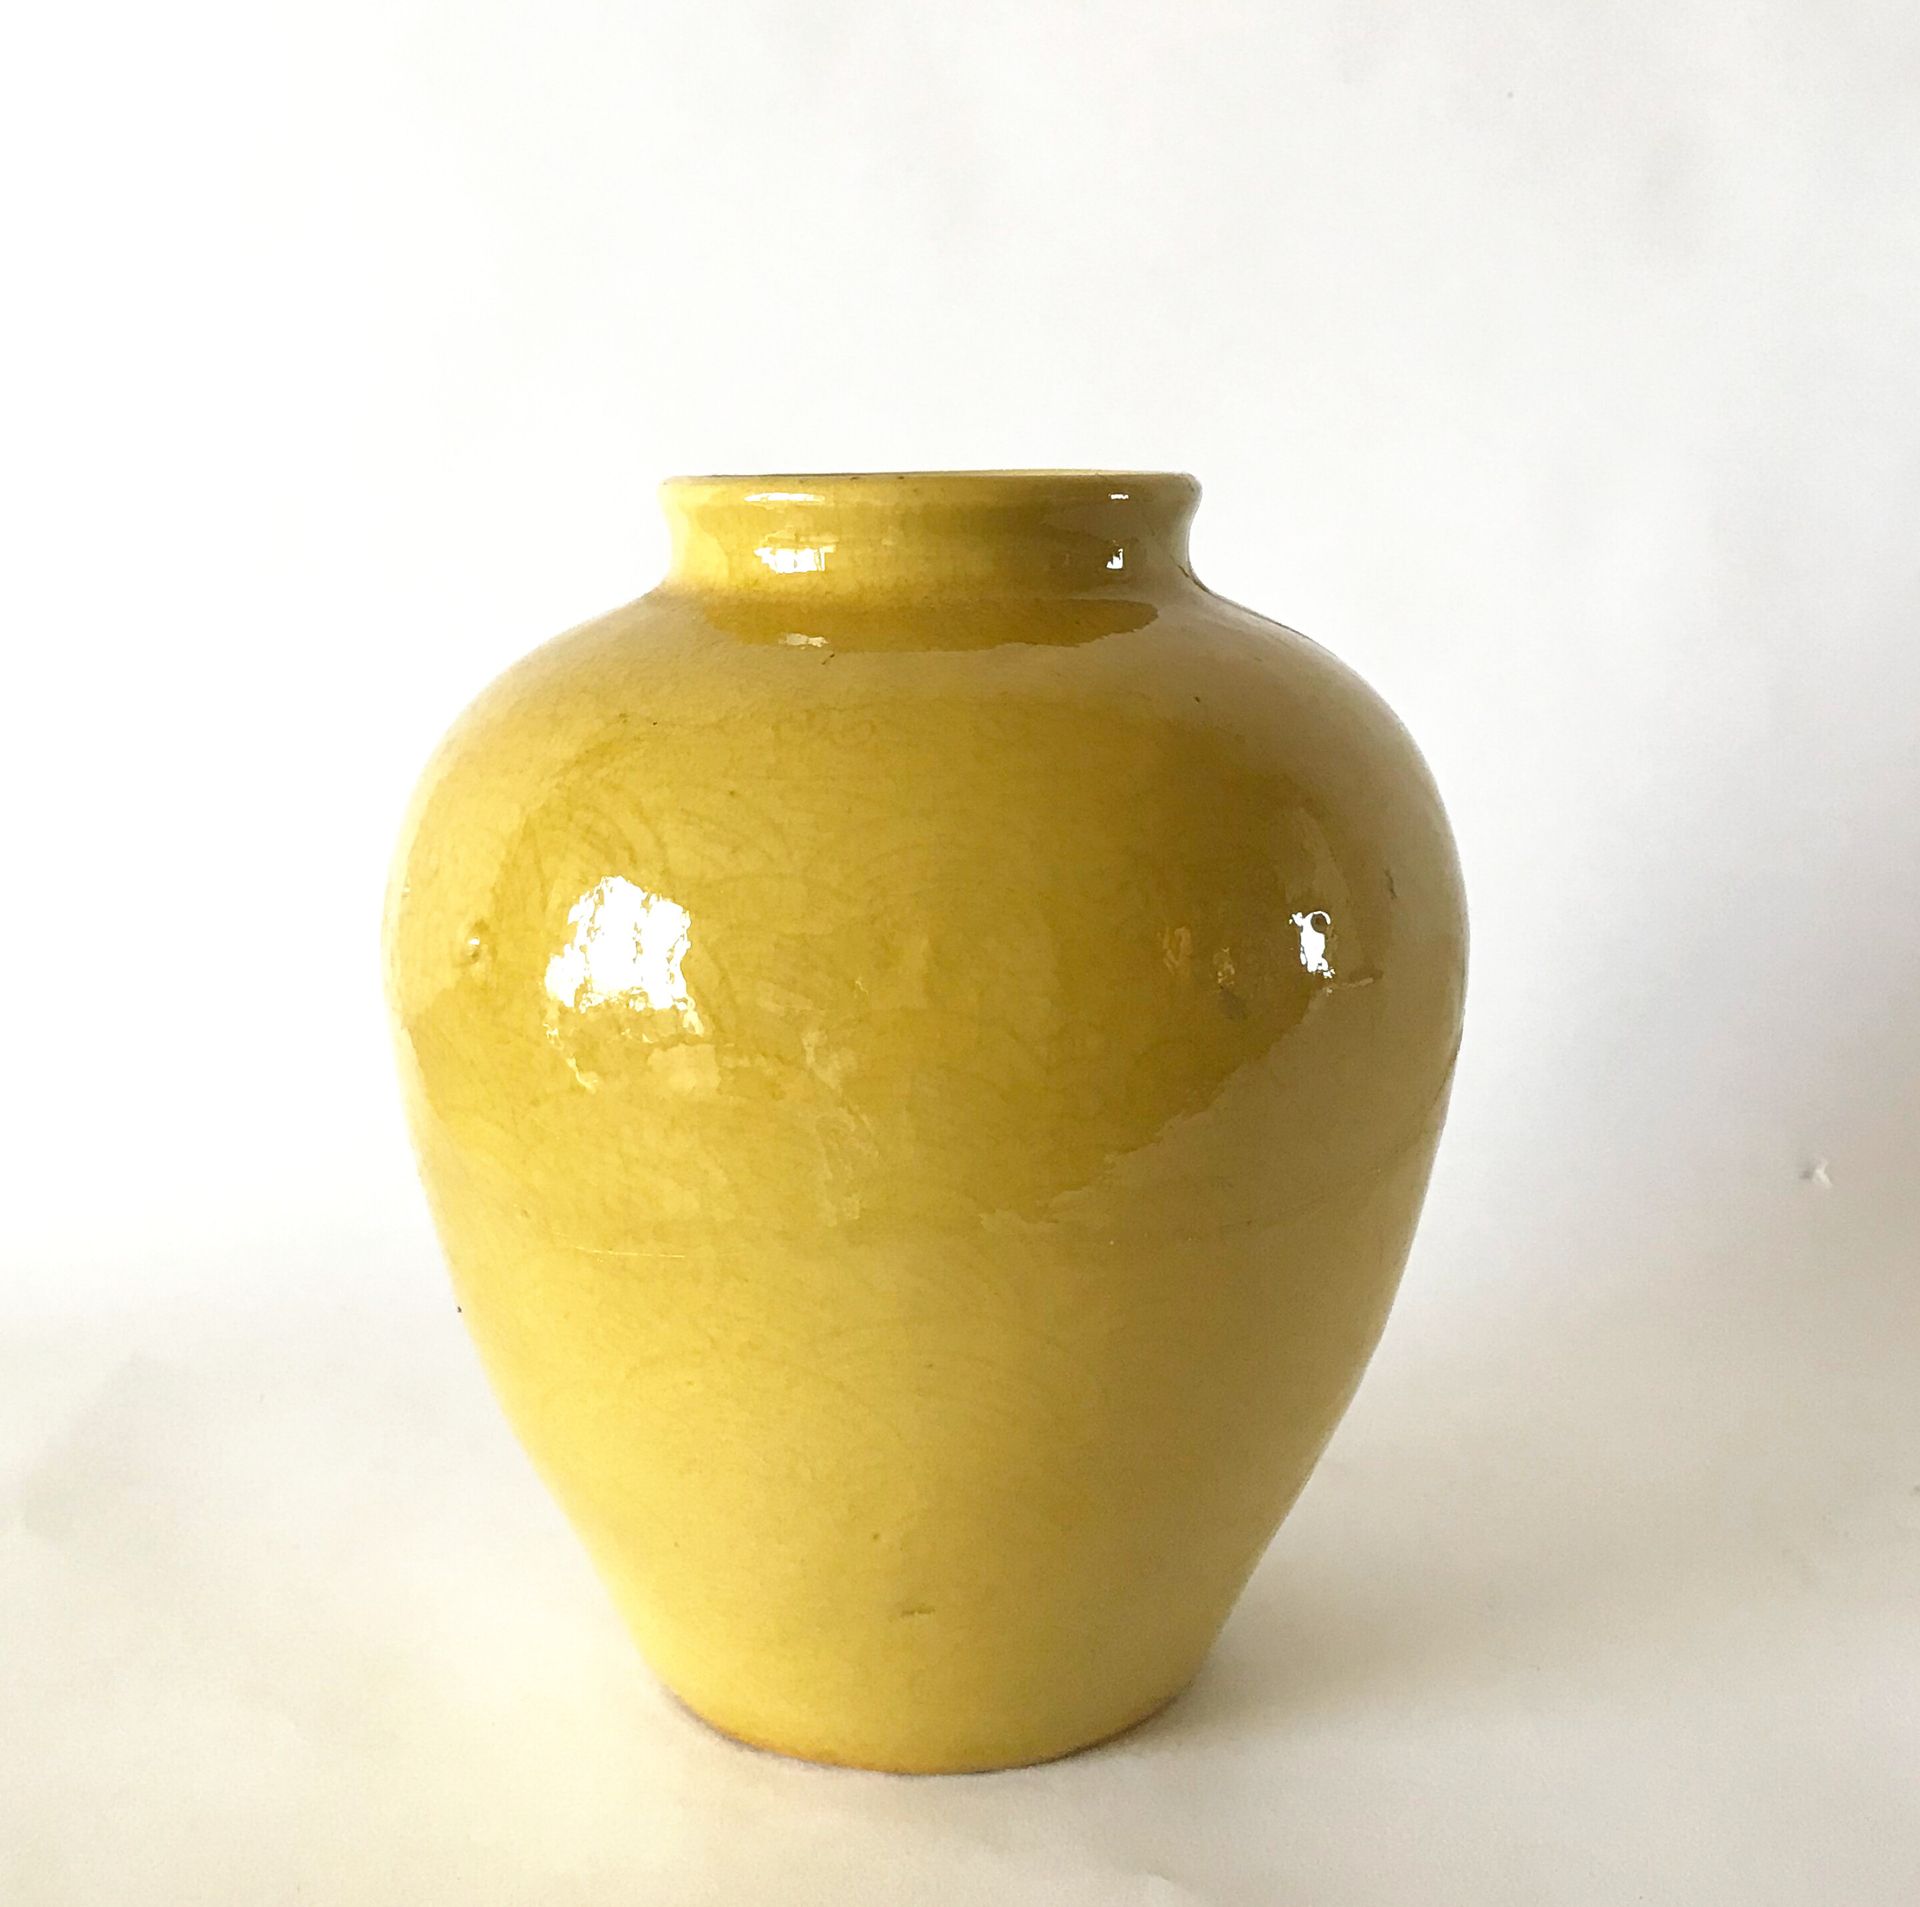 CHINE 中国

单色釉面陶瓷卵形花瓶，黄底，釉下刻度图案。

釉下六芒星标记 - 嘉庆时期（19世纪初

H.16厘米

破损和修复